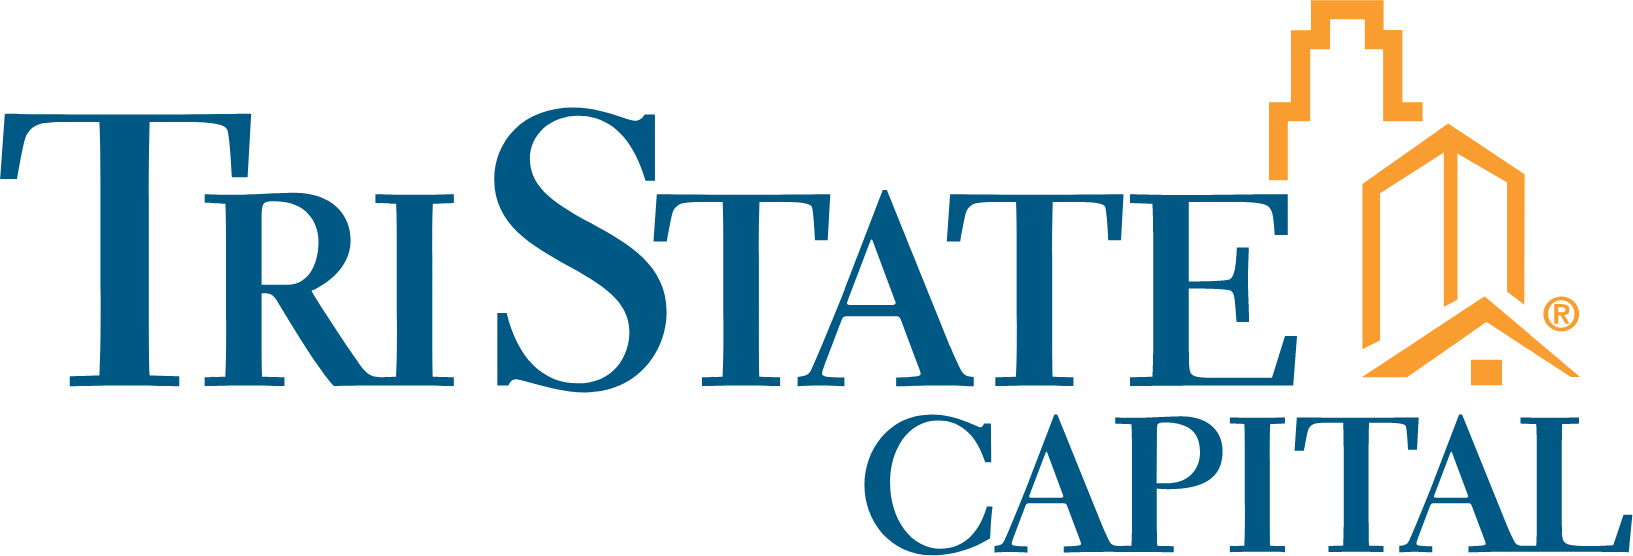 TriState Capital Holdings
 logo large (transparent PNG)